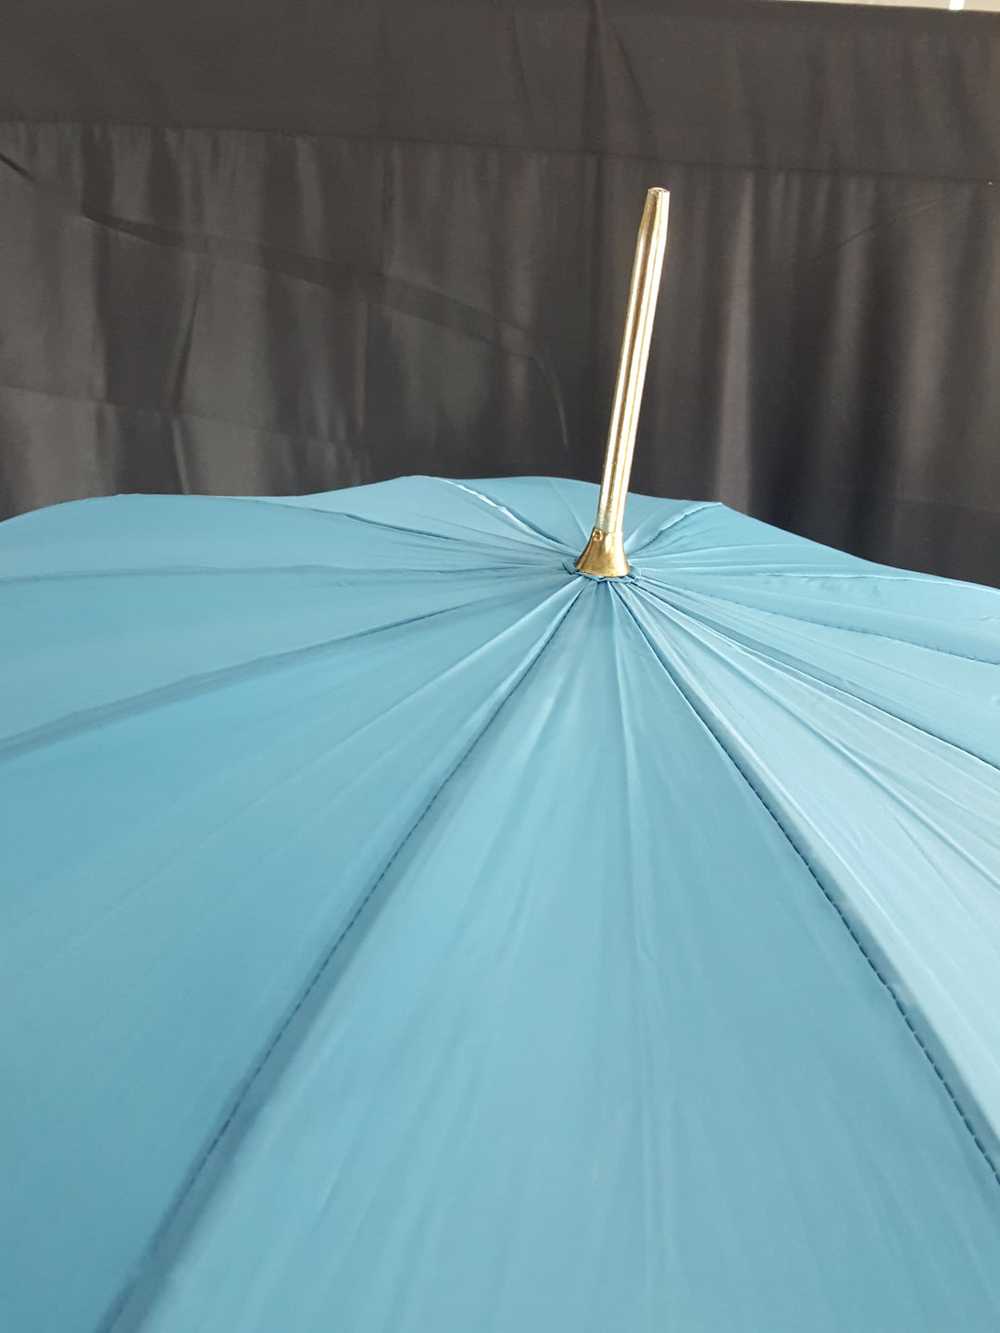 Vintage Parosol Umbrella - image 9